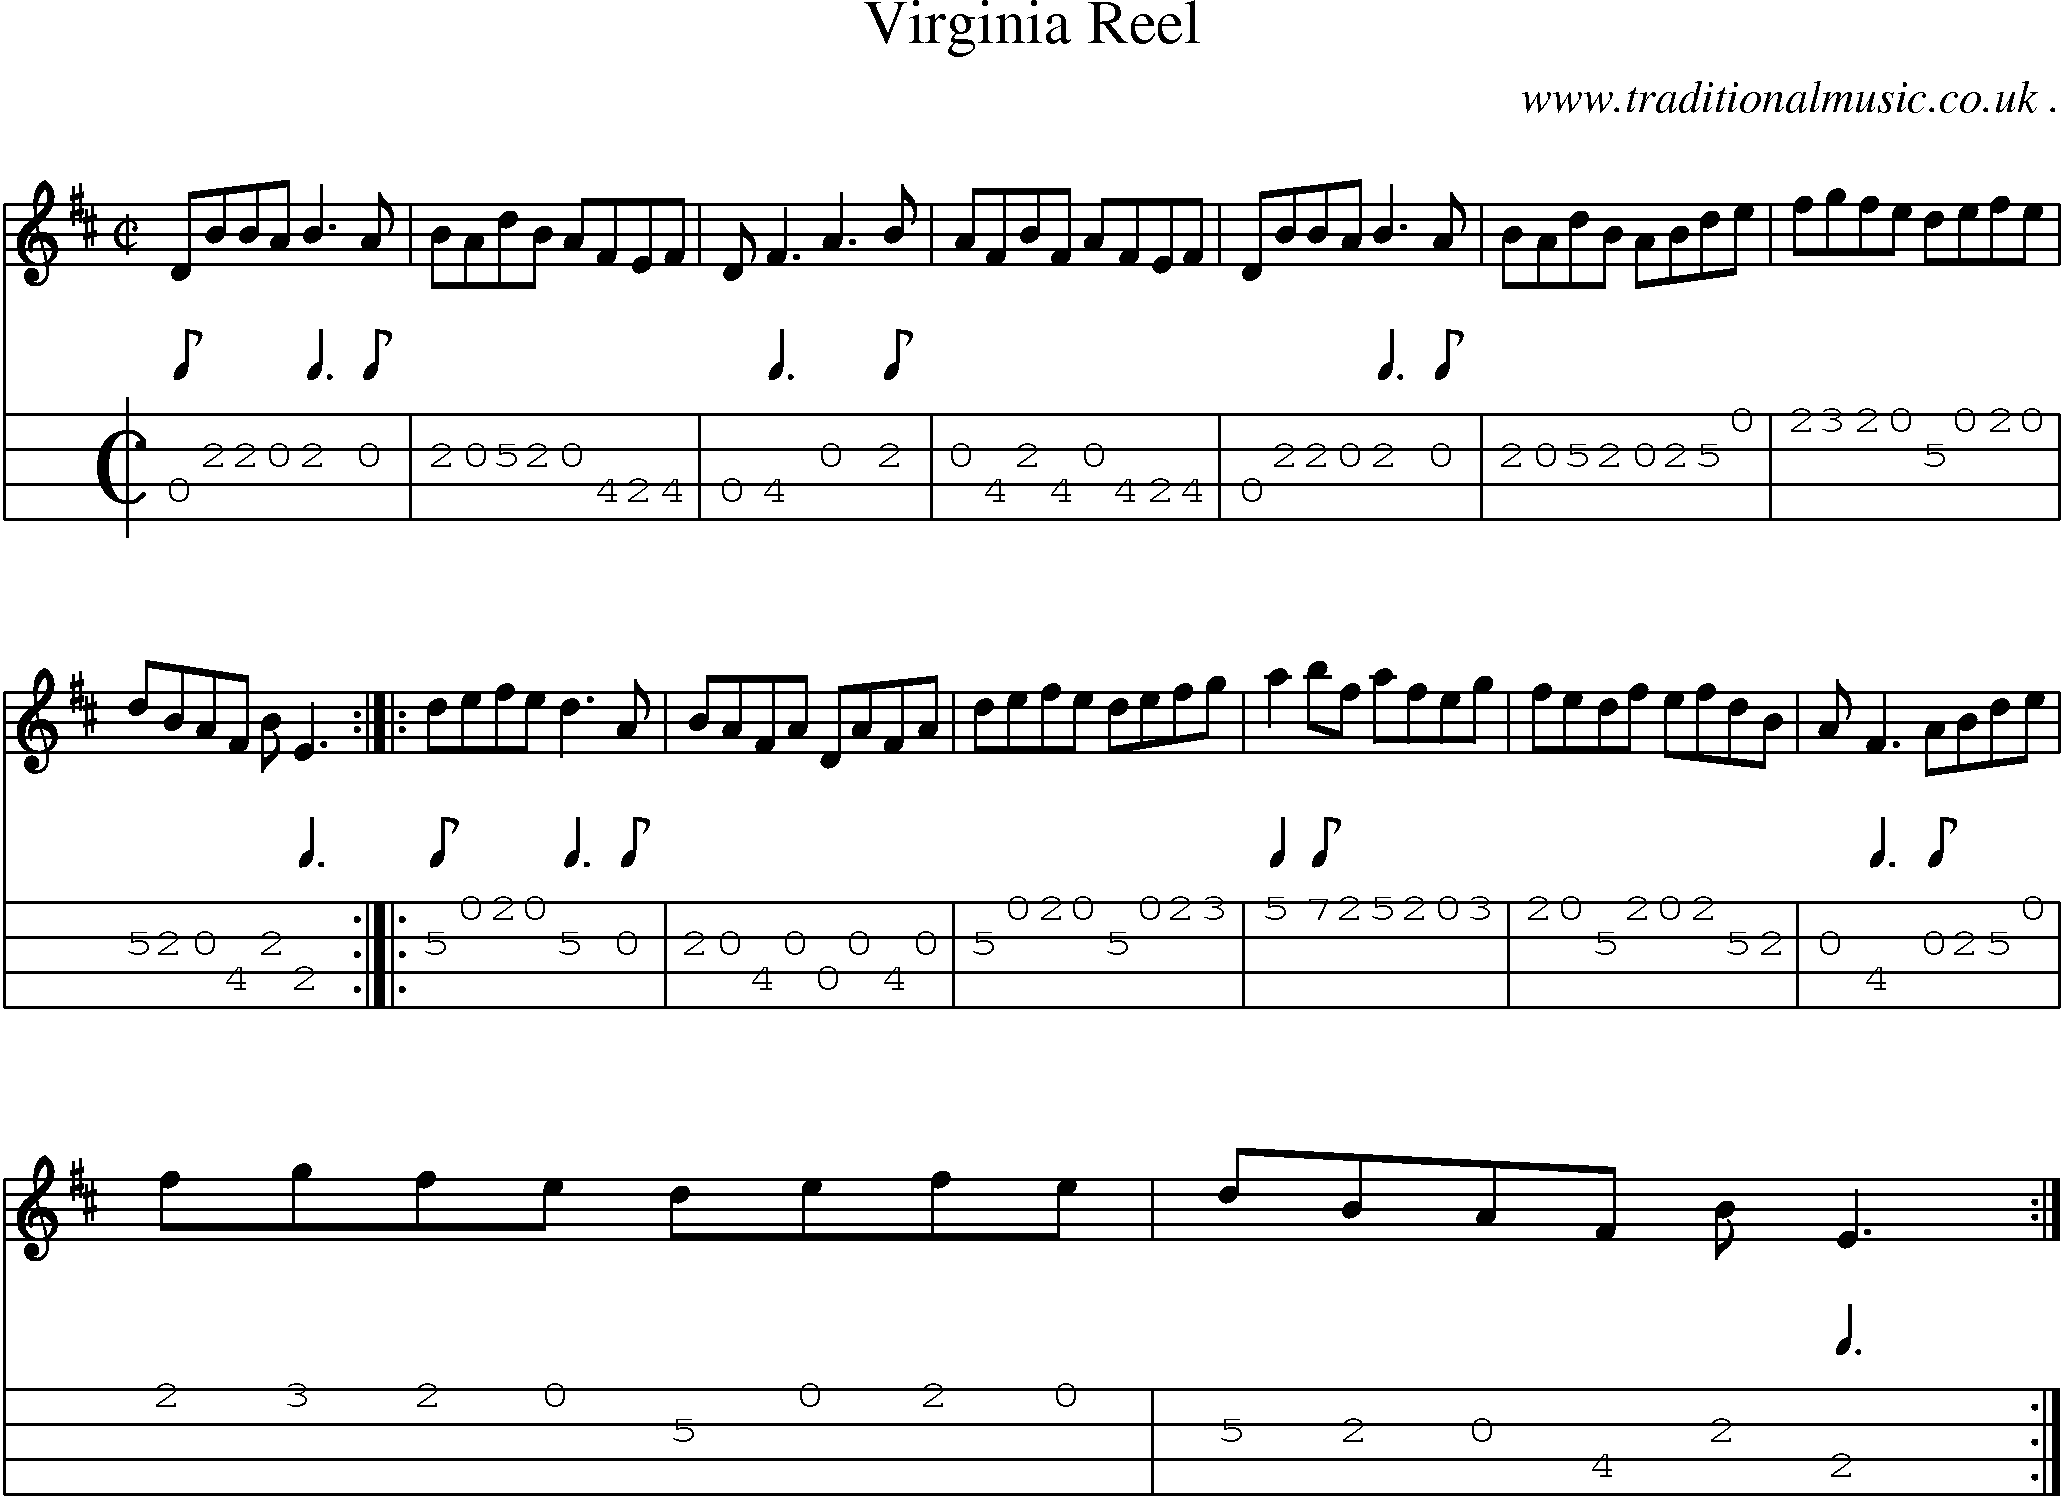 Sheet-Music and Mandolin Tabs for Virginia Reel